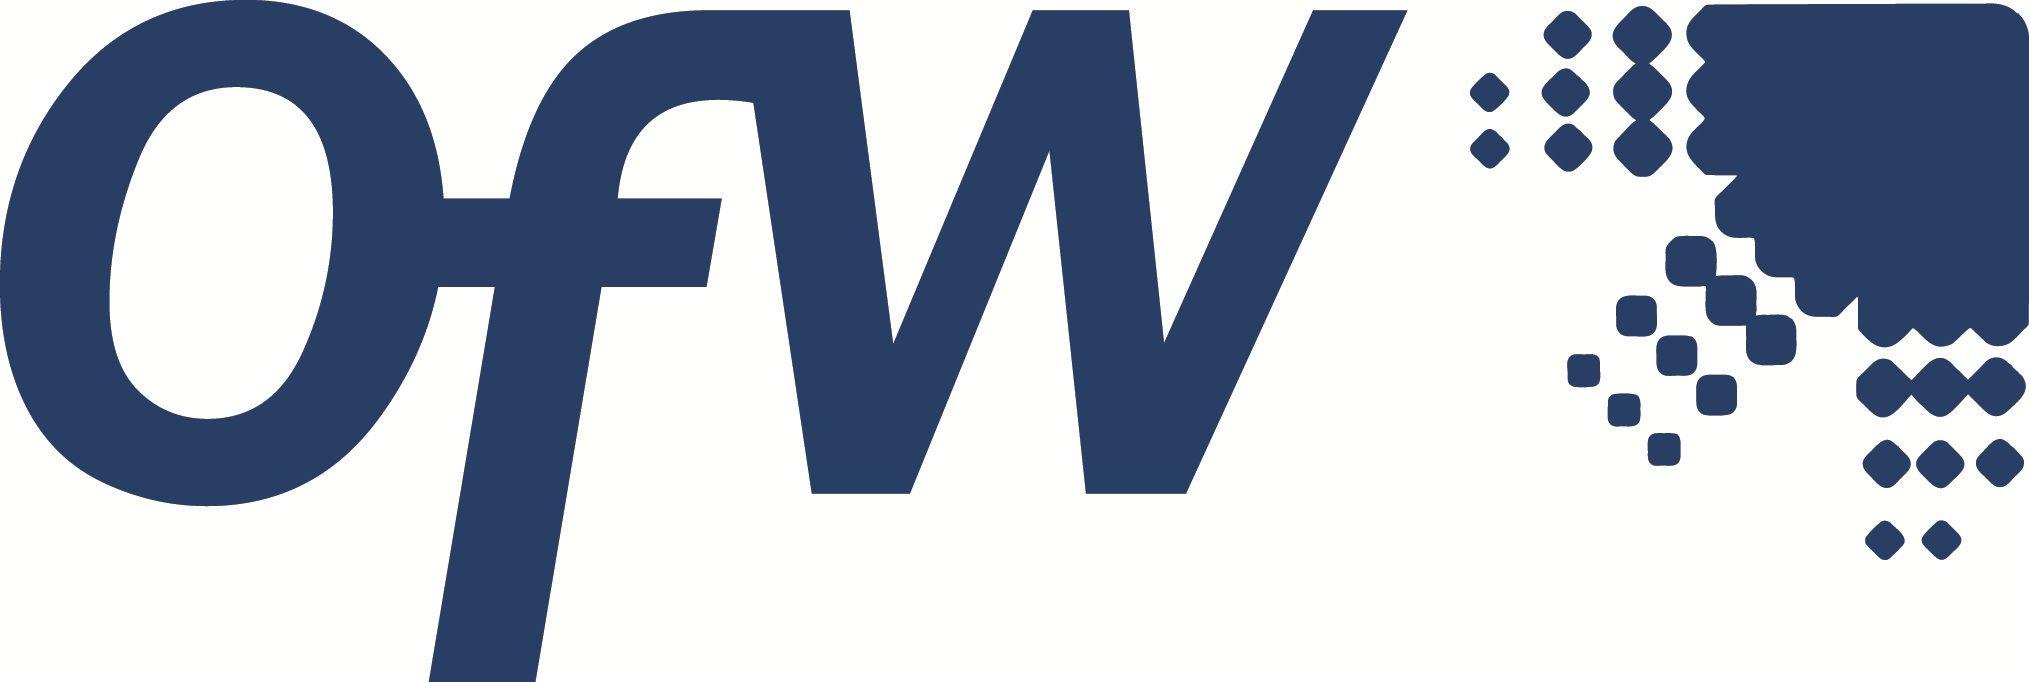 OFW Logo - File:OFW-Logo.jpg - Wikimedia Commons